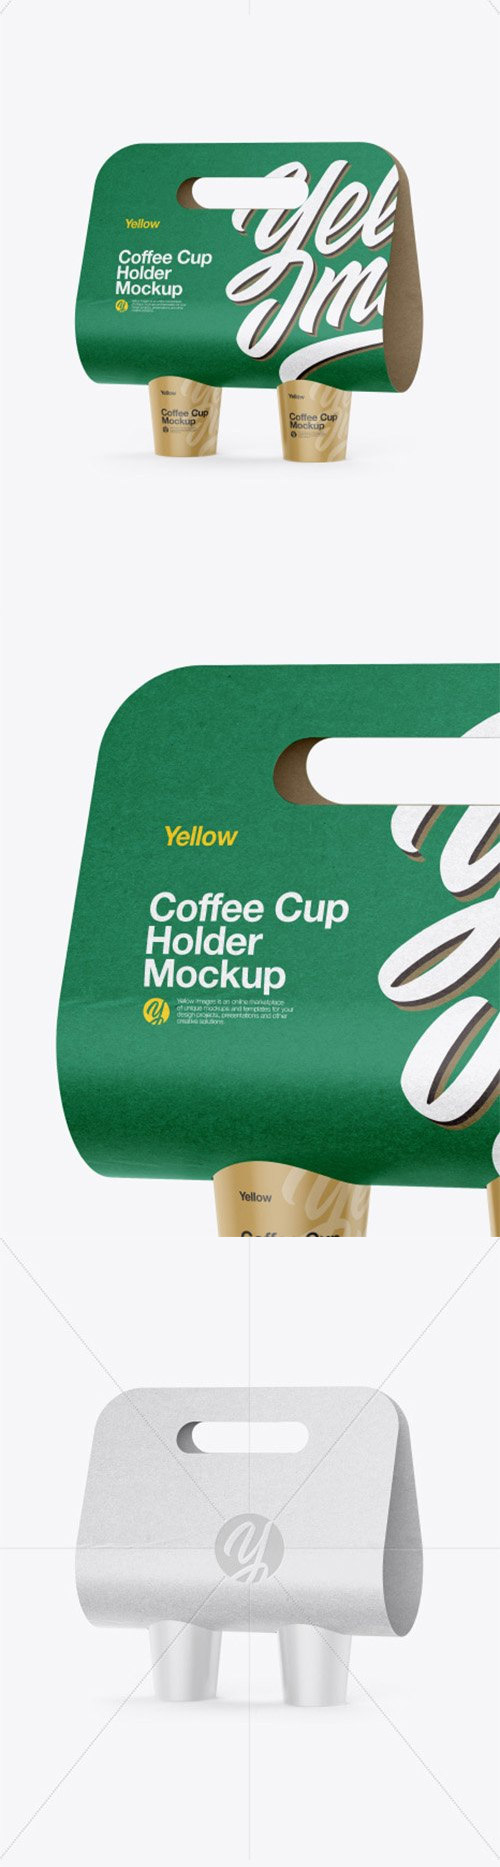 Coffee Cups Holder Mockup - Half Side View 33530